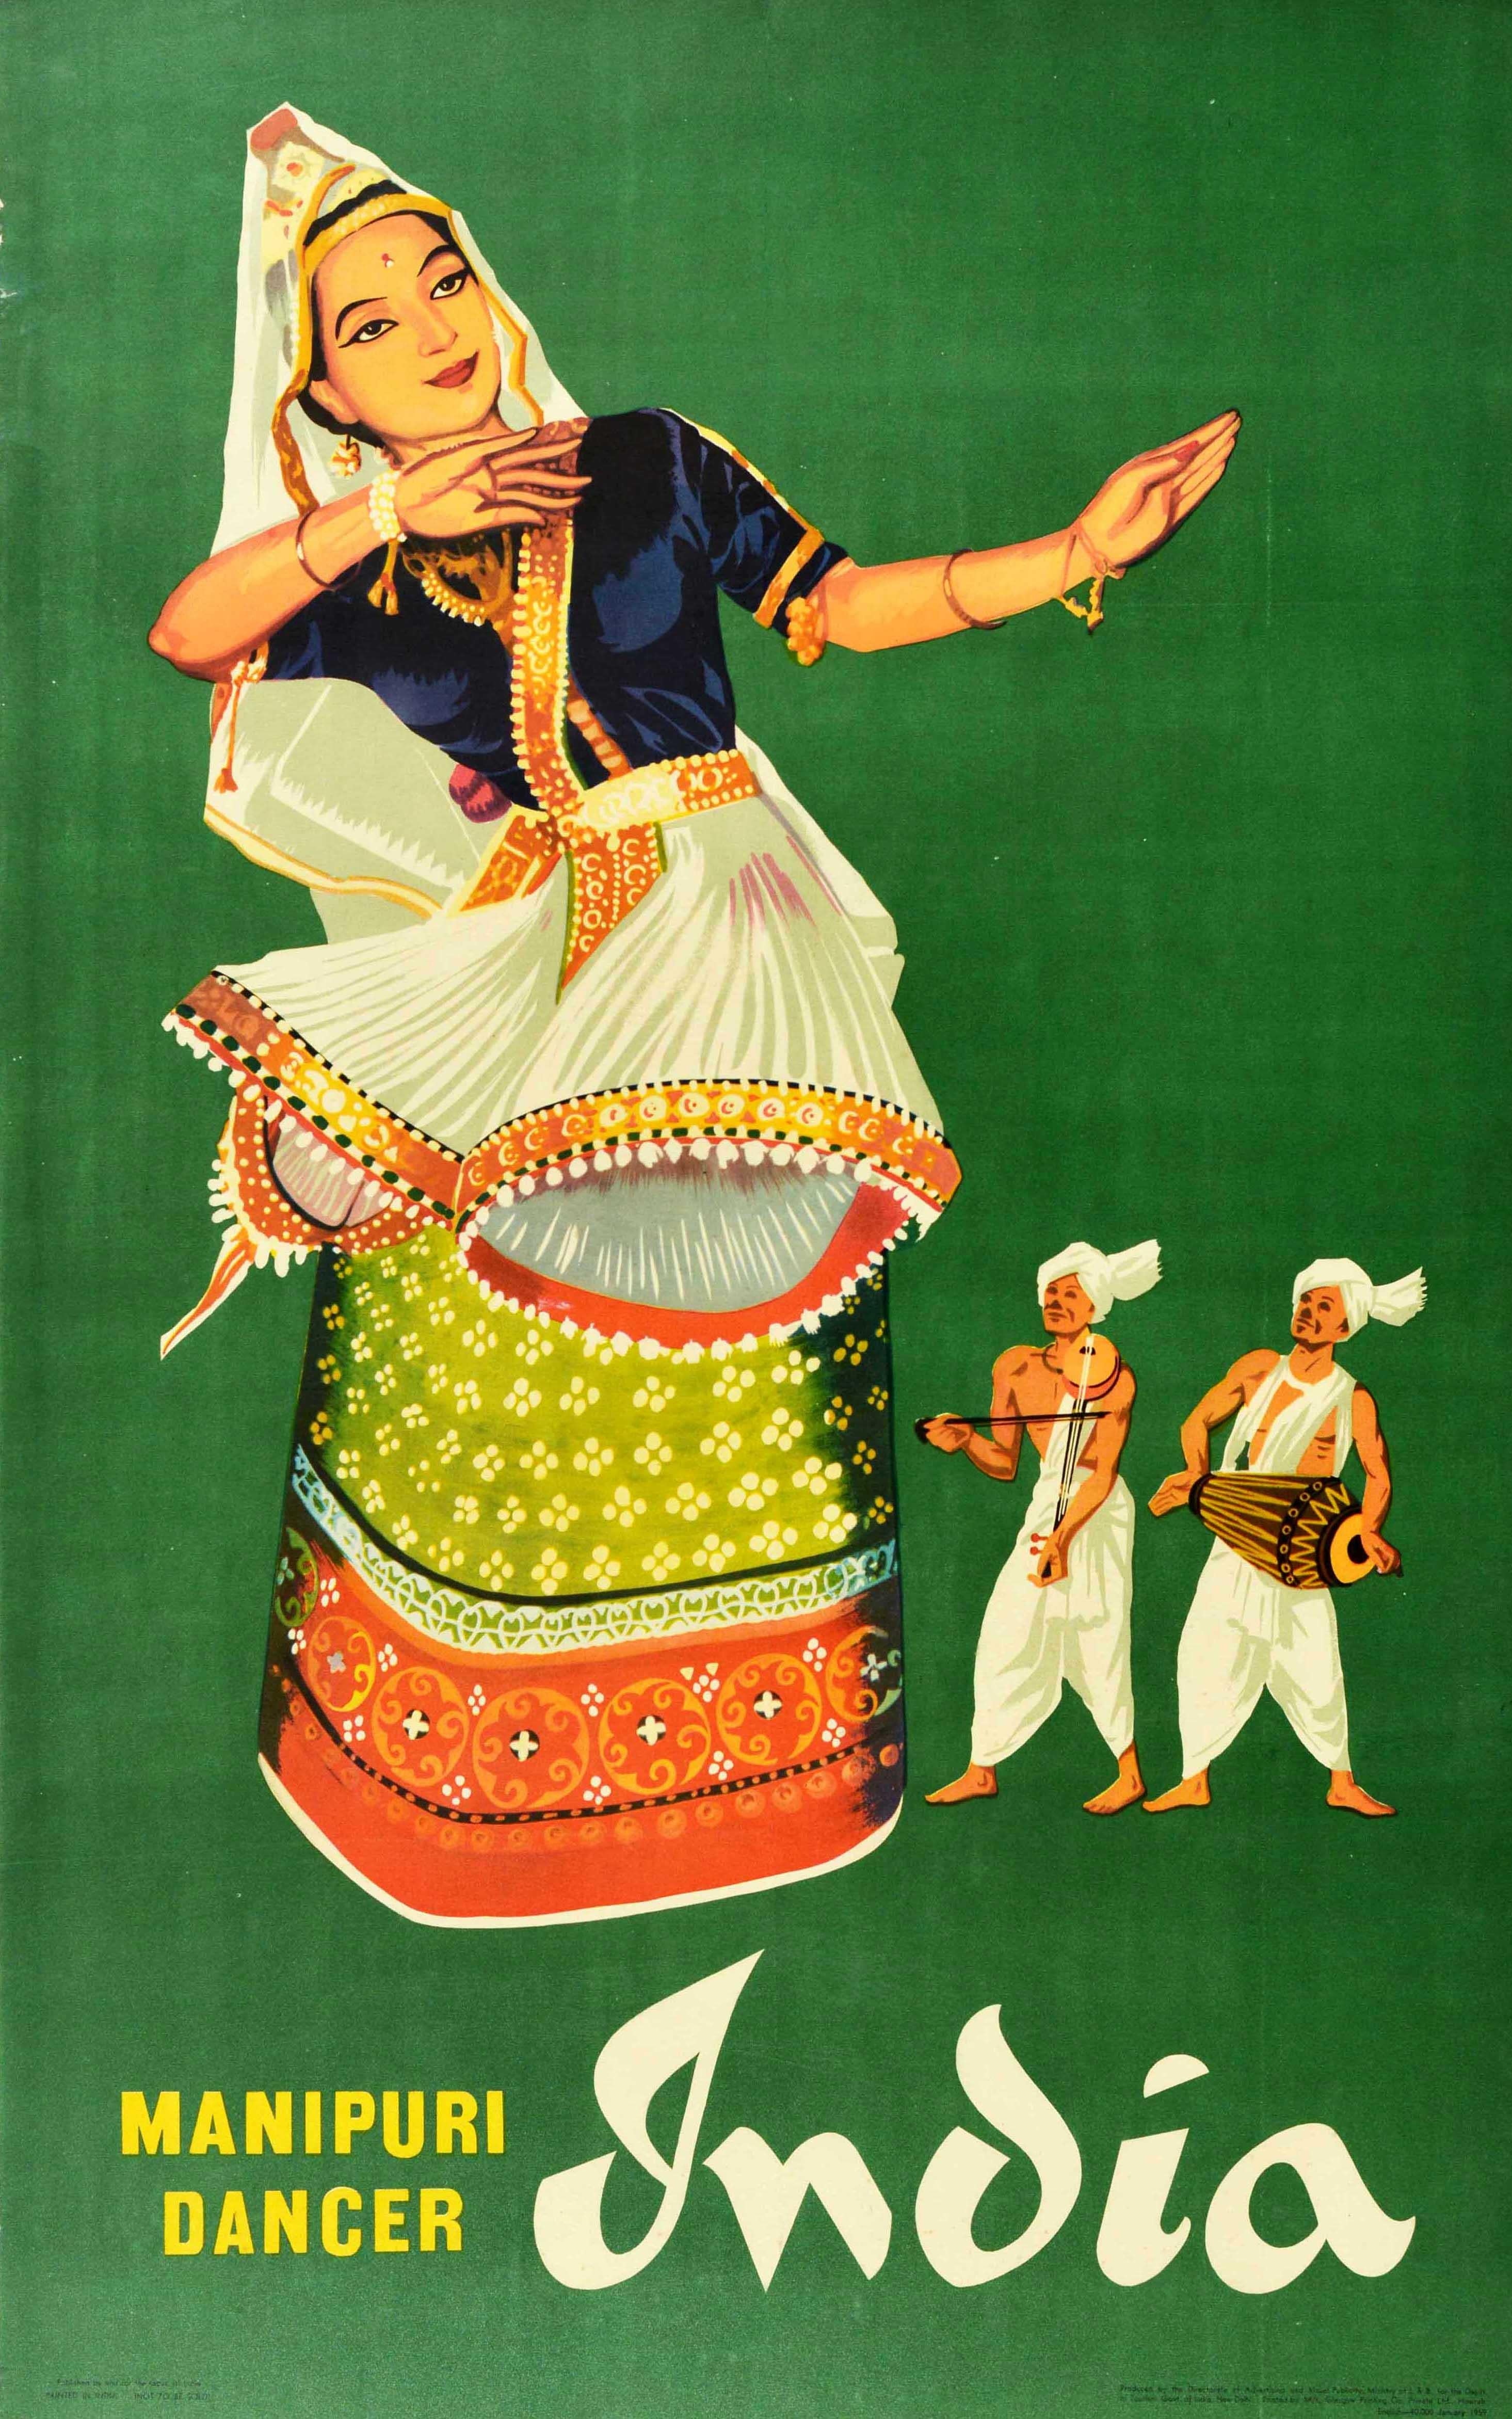 Unknown Print - Original Vintage Travel Poster For India Manipuri Dancer And Musicians Artwork